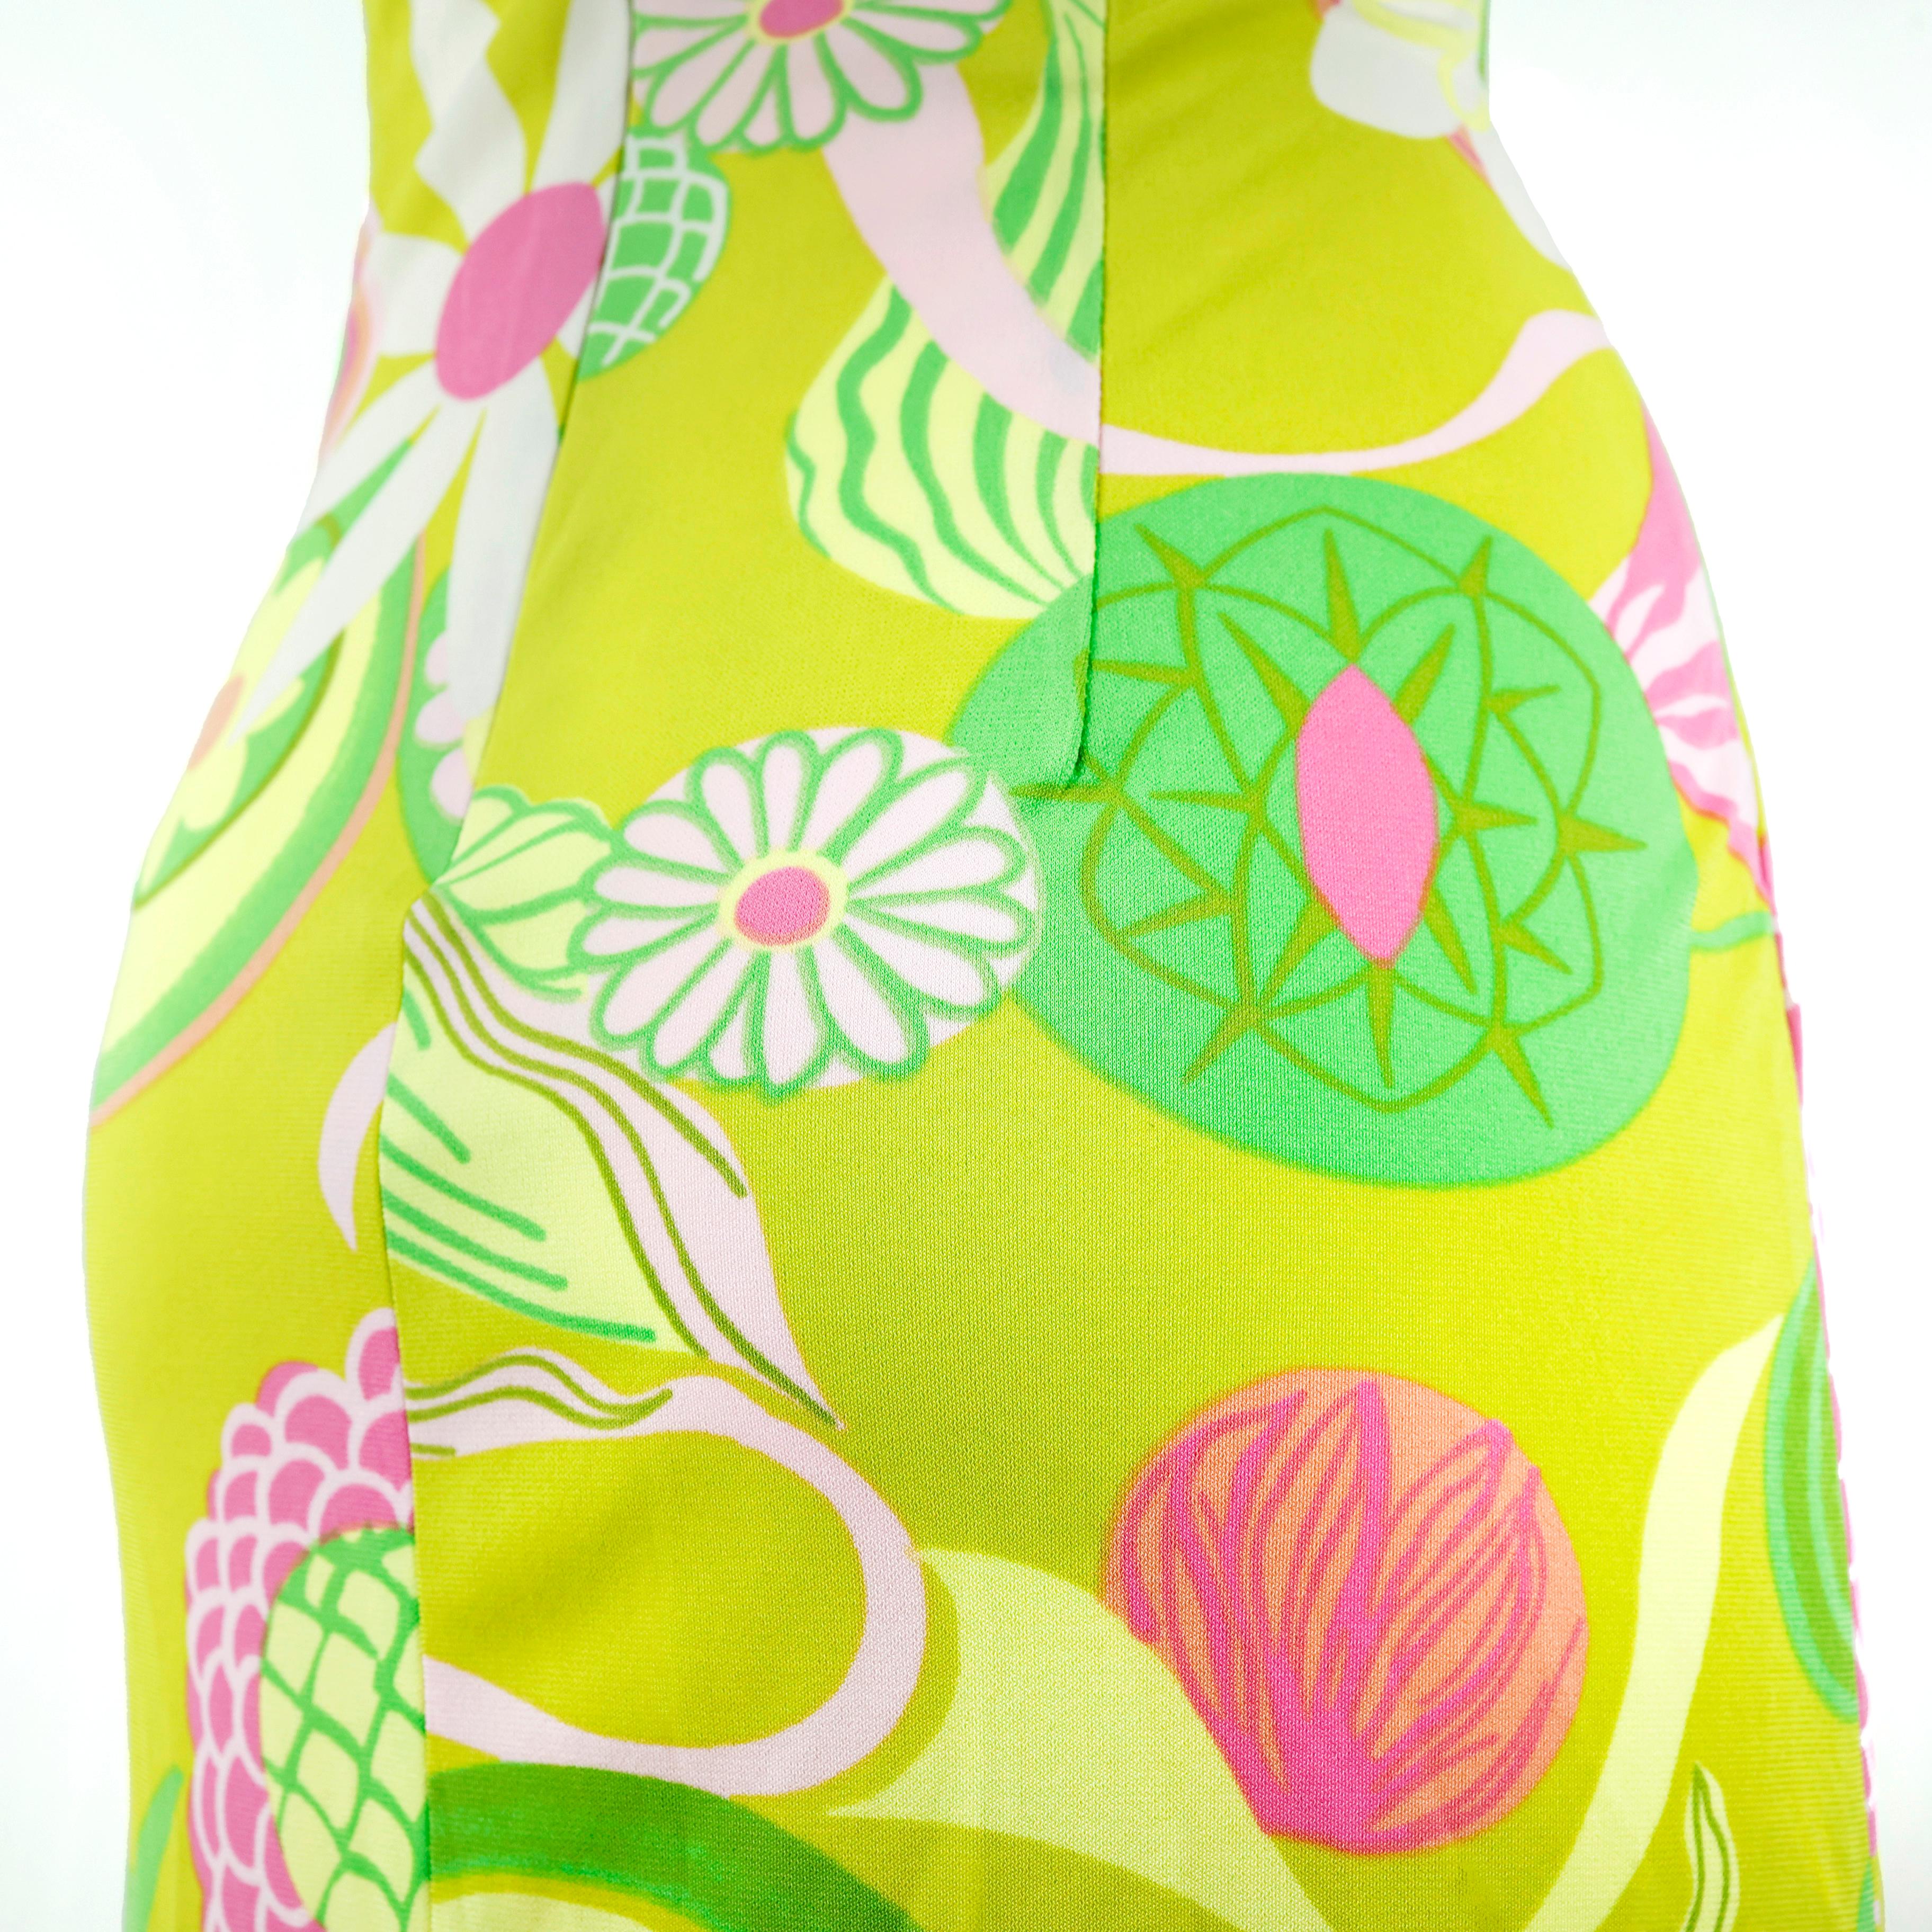 Dolce e Gabbana dress - Dolce e Gabbana Y2K floral green/multicolor mini dress. Size 44 IT

Condition:
Excellent.